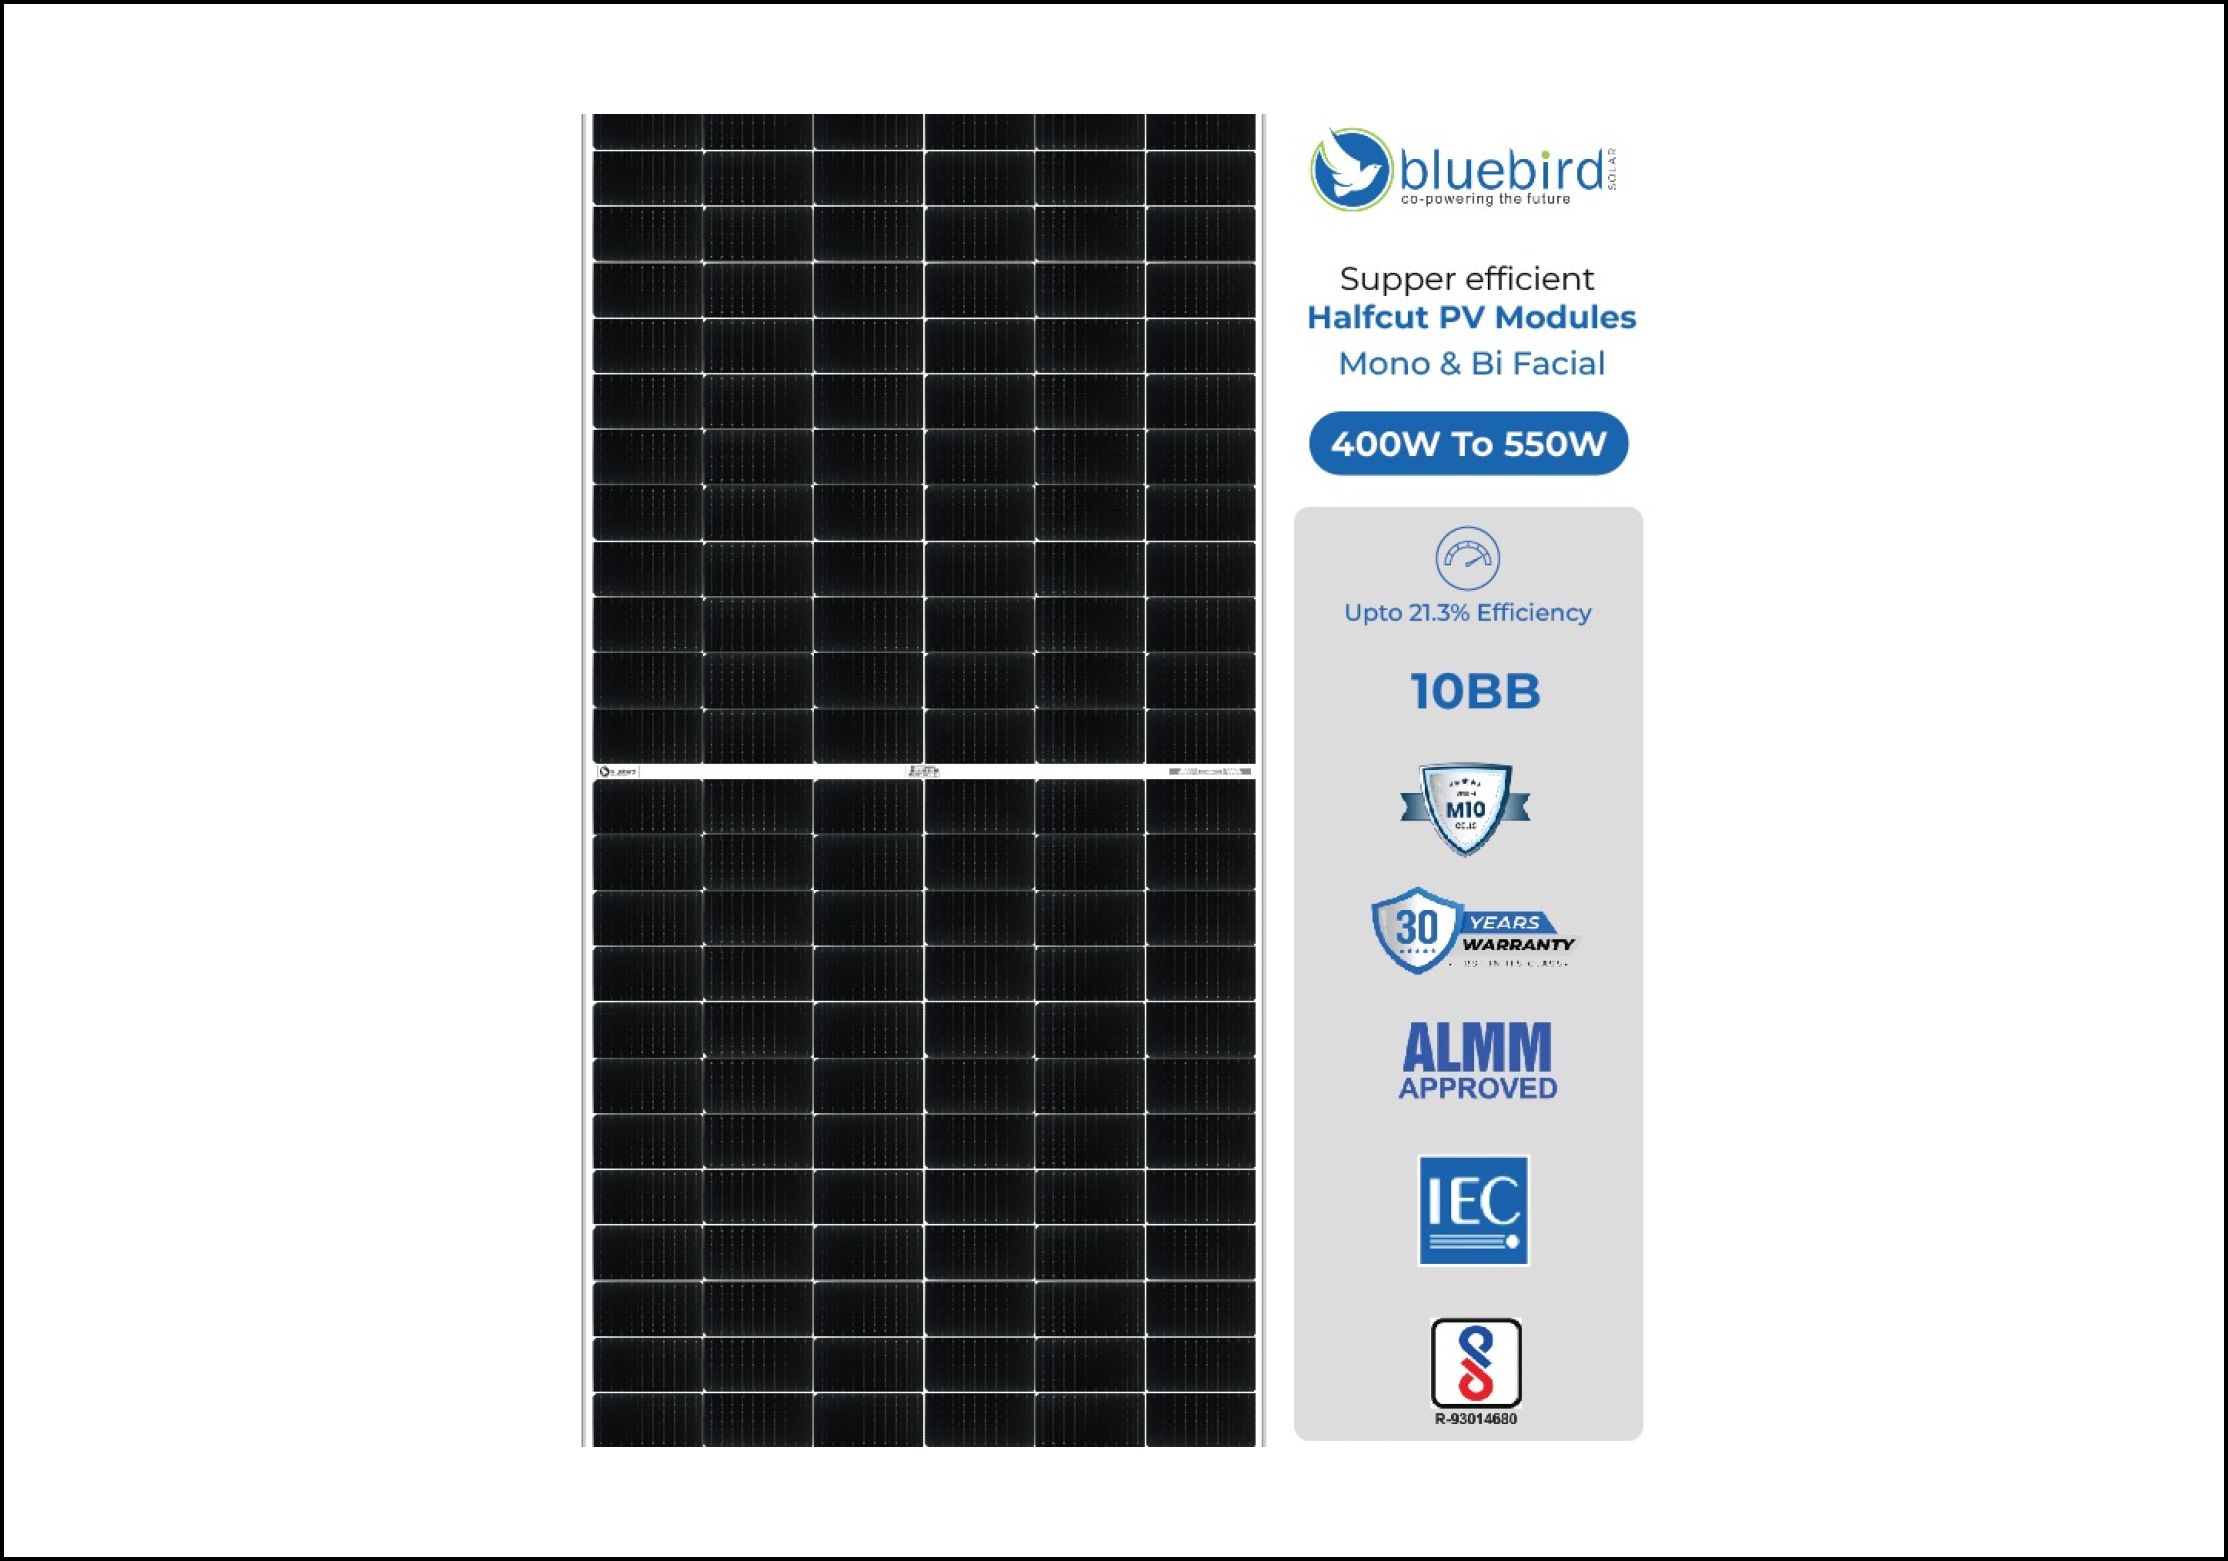 Bluebird solar unveils M10 half-cut solar PV modules at Renewable Energy Expo in Chennai